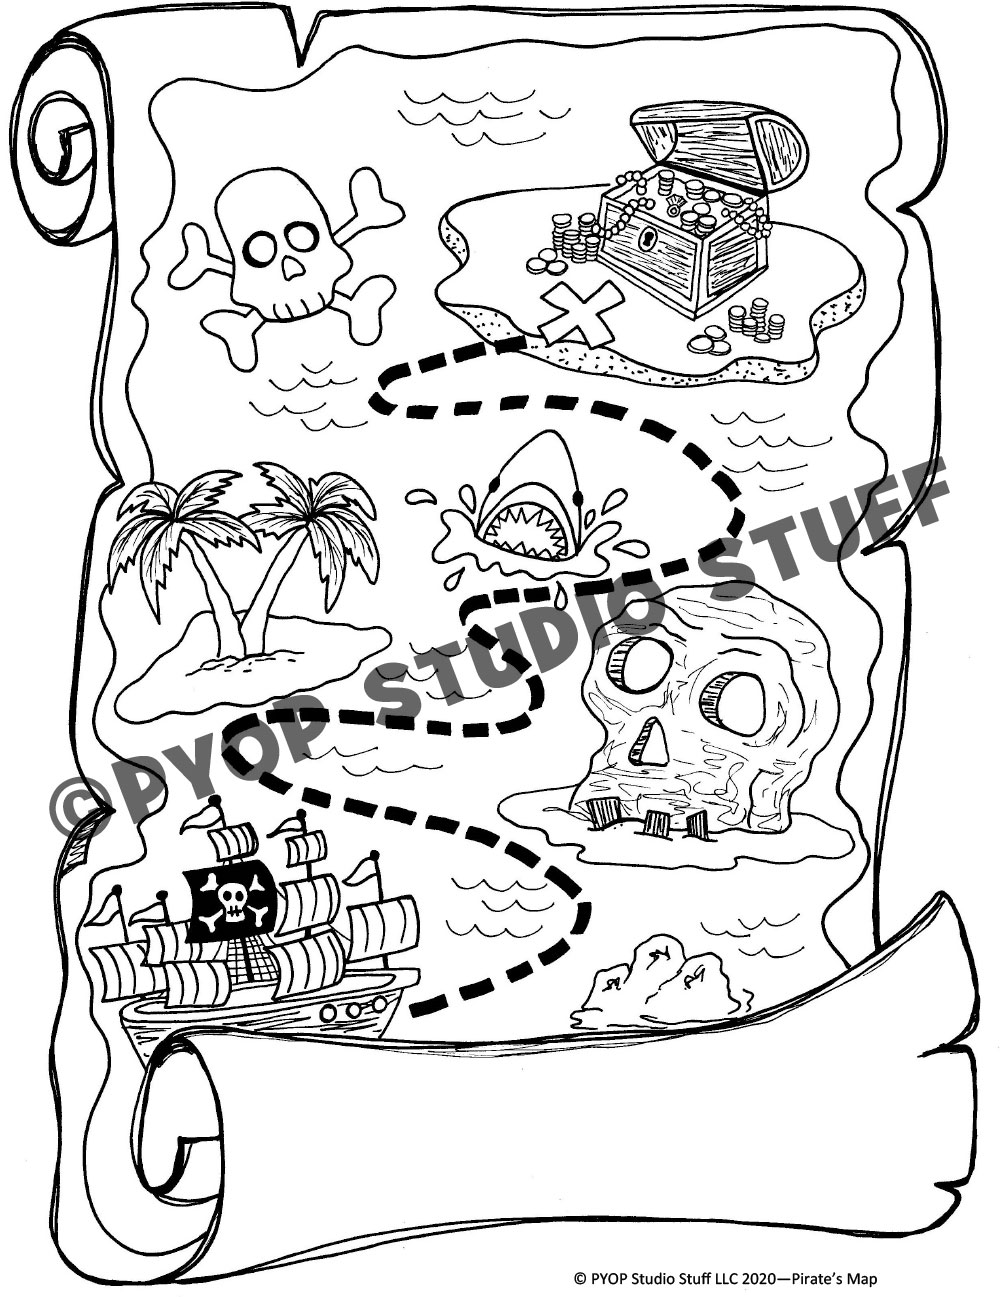 Pirate’s Map – PYOP Studio Stuff